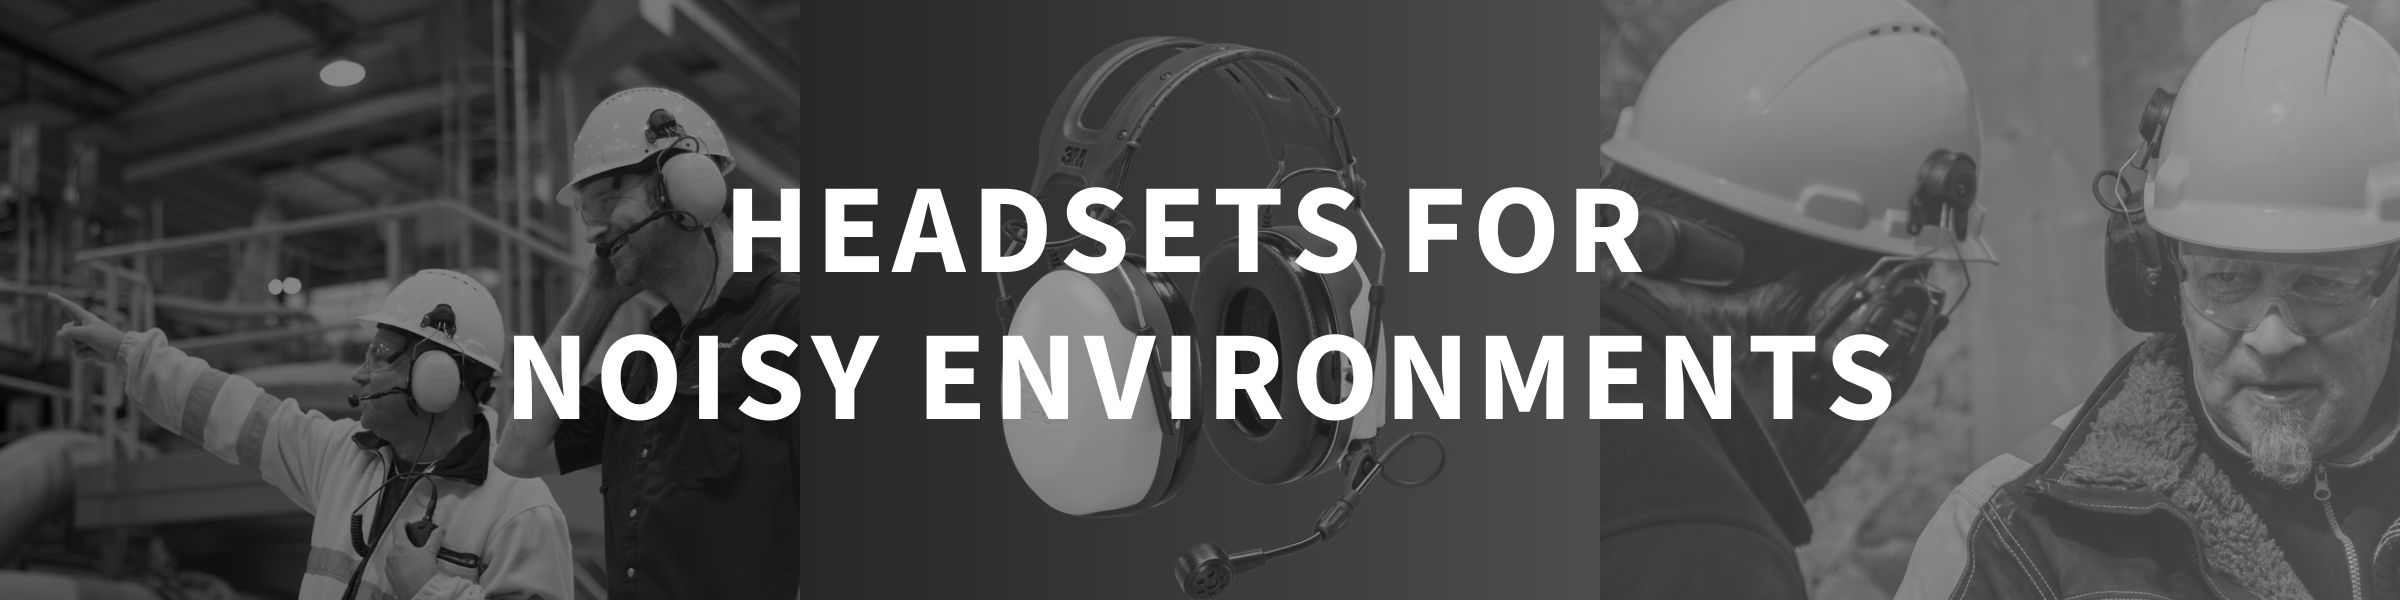 Headsets for Noisy Environments